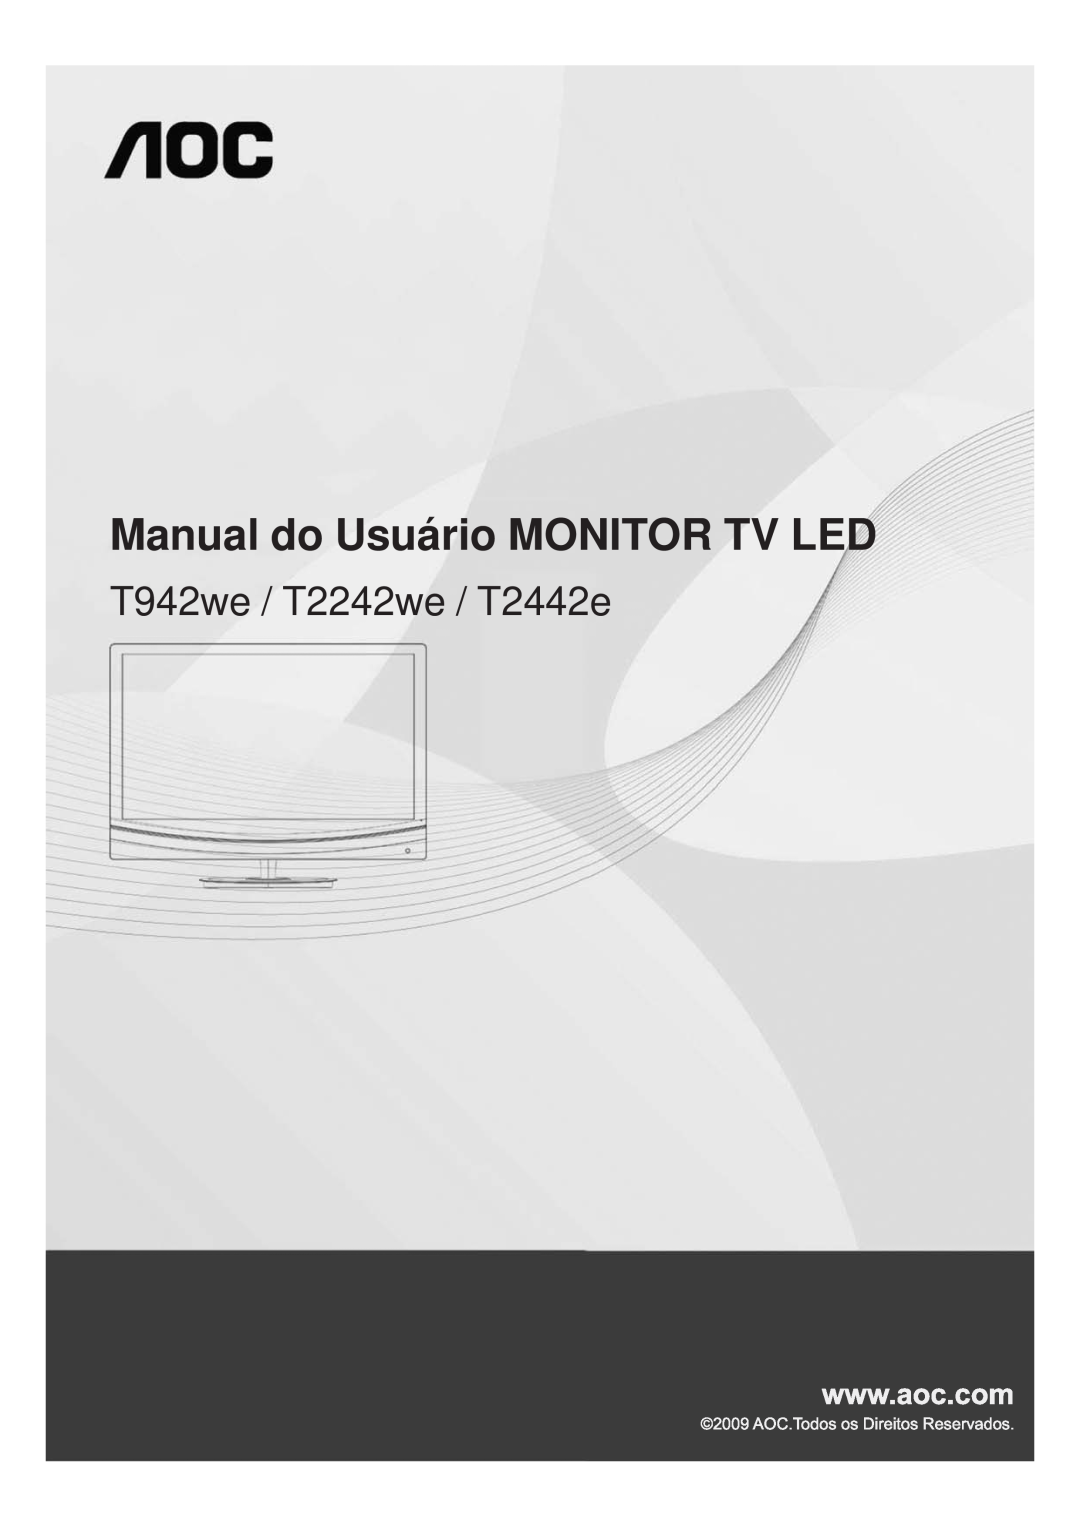 AOC T942WE, T2242WE, T2442E manual Manual do Usuário MONITOR TV LED, T942we / T2242we / T2442e 